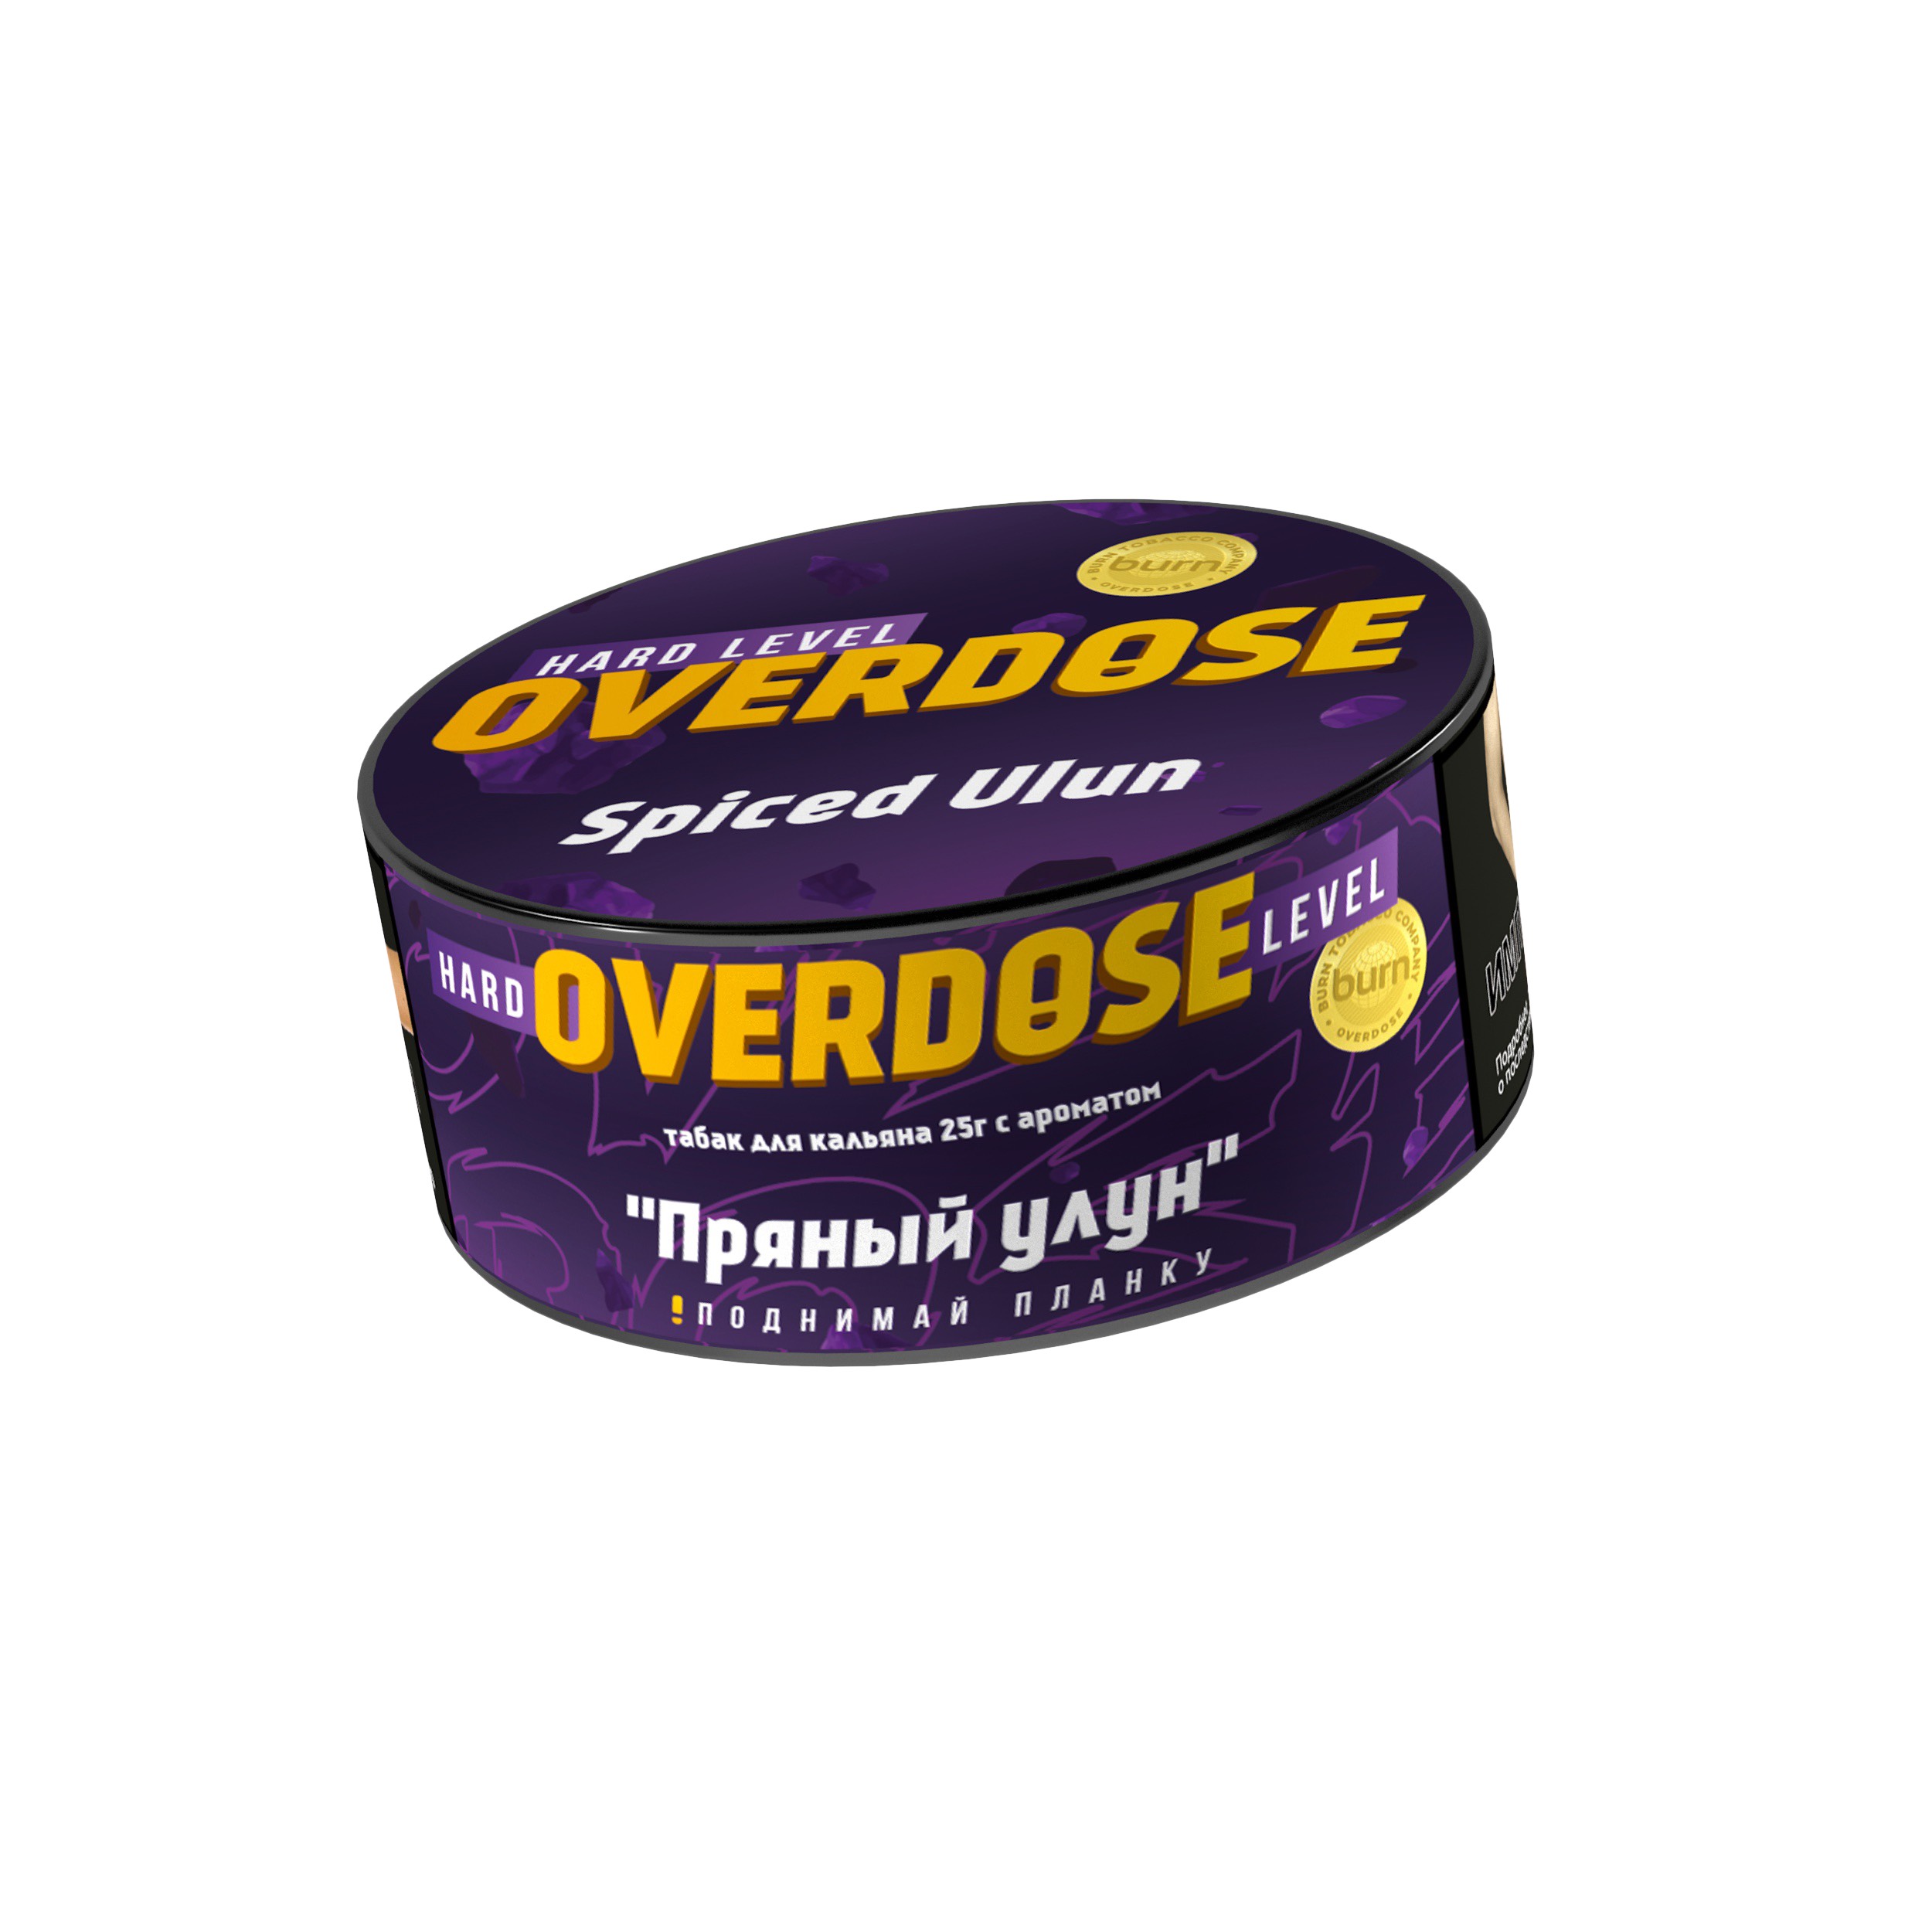 Табак - Overdose - Spiced Ulun - 25 g